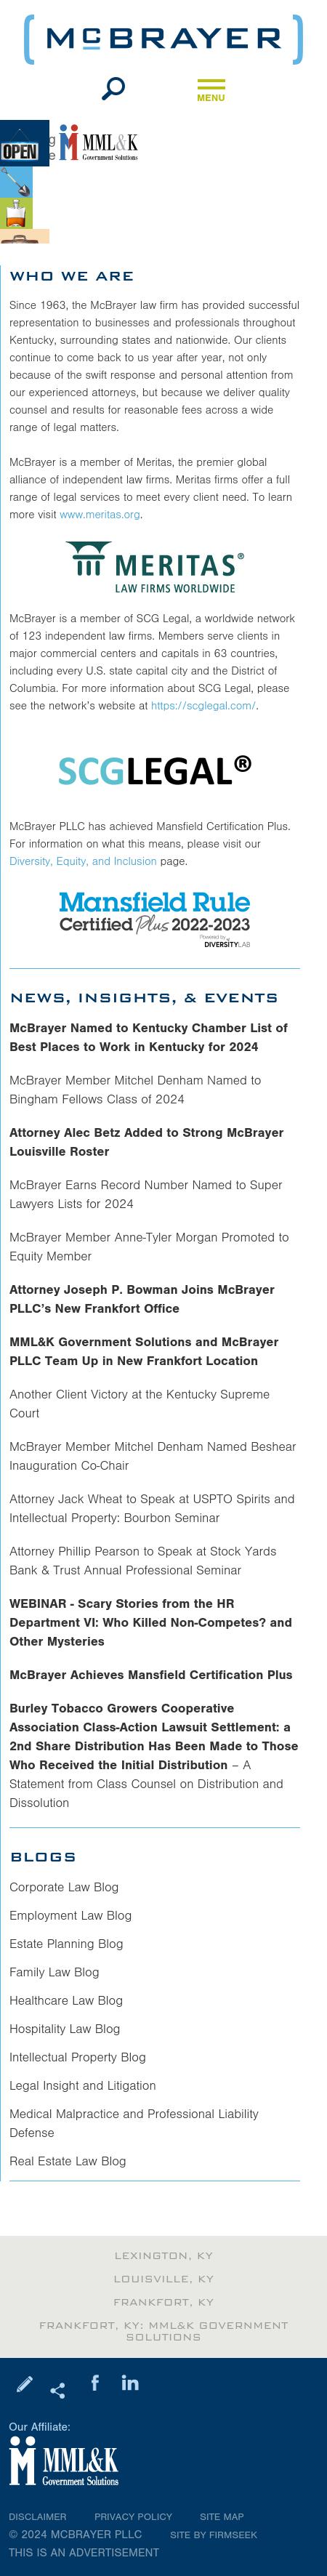 McBrayer, McGinnis, Leslie & Kirkland, PLLC - Greenup KY Lawyers